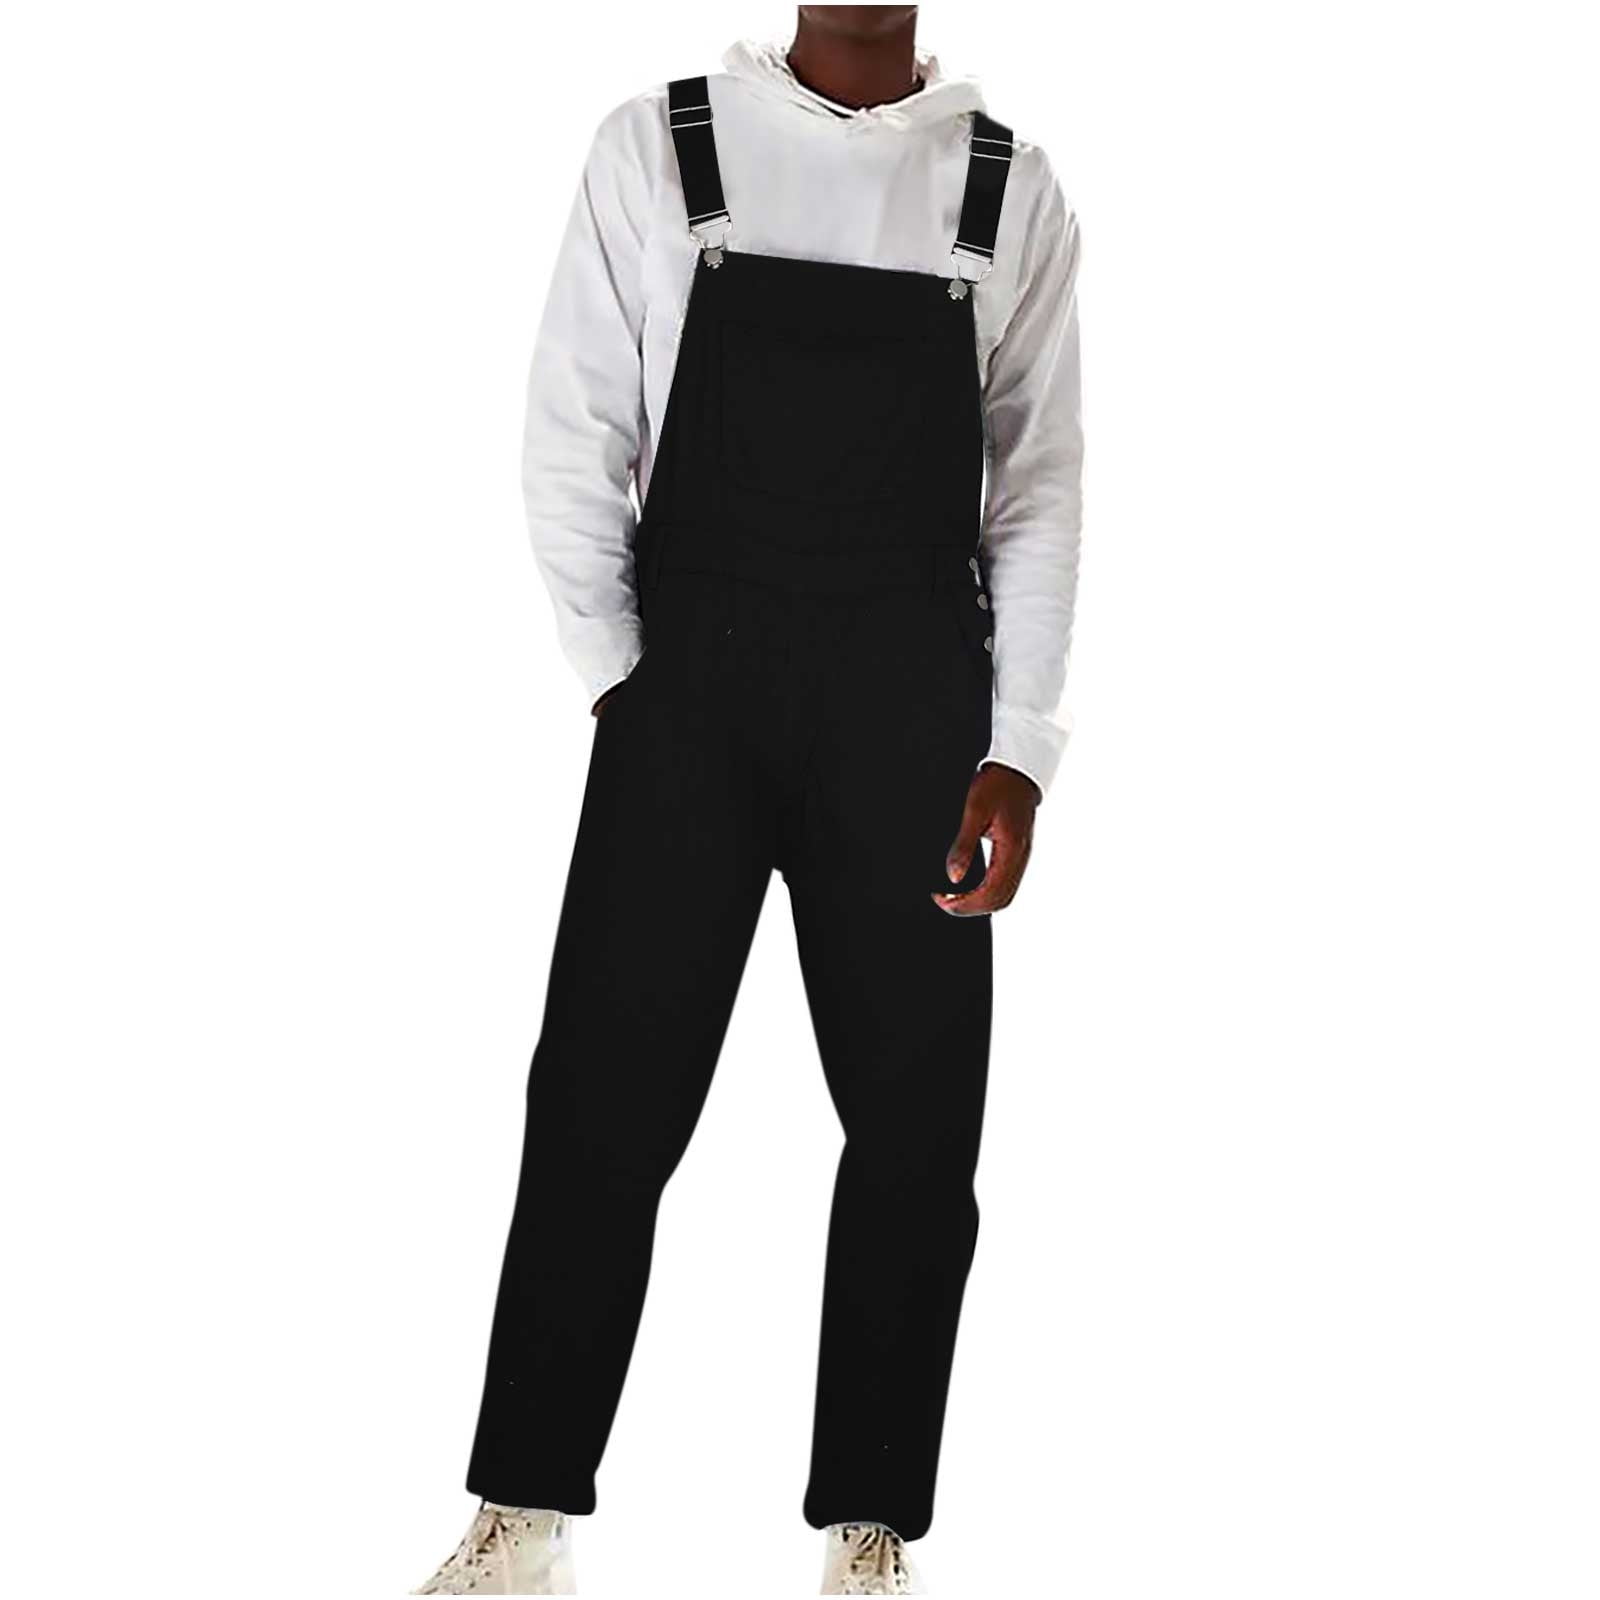 Yyeselk Men's Denim Bib Overalls Workwear with Adjustable Straps ...